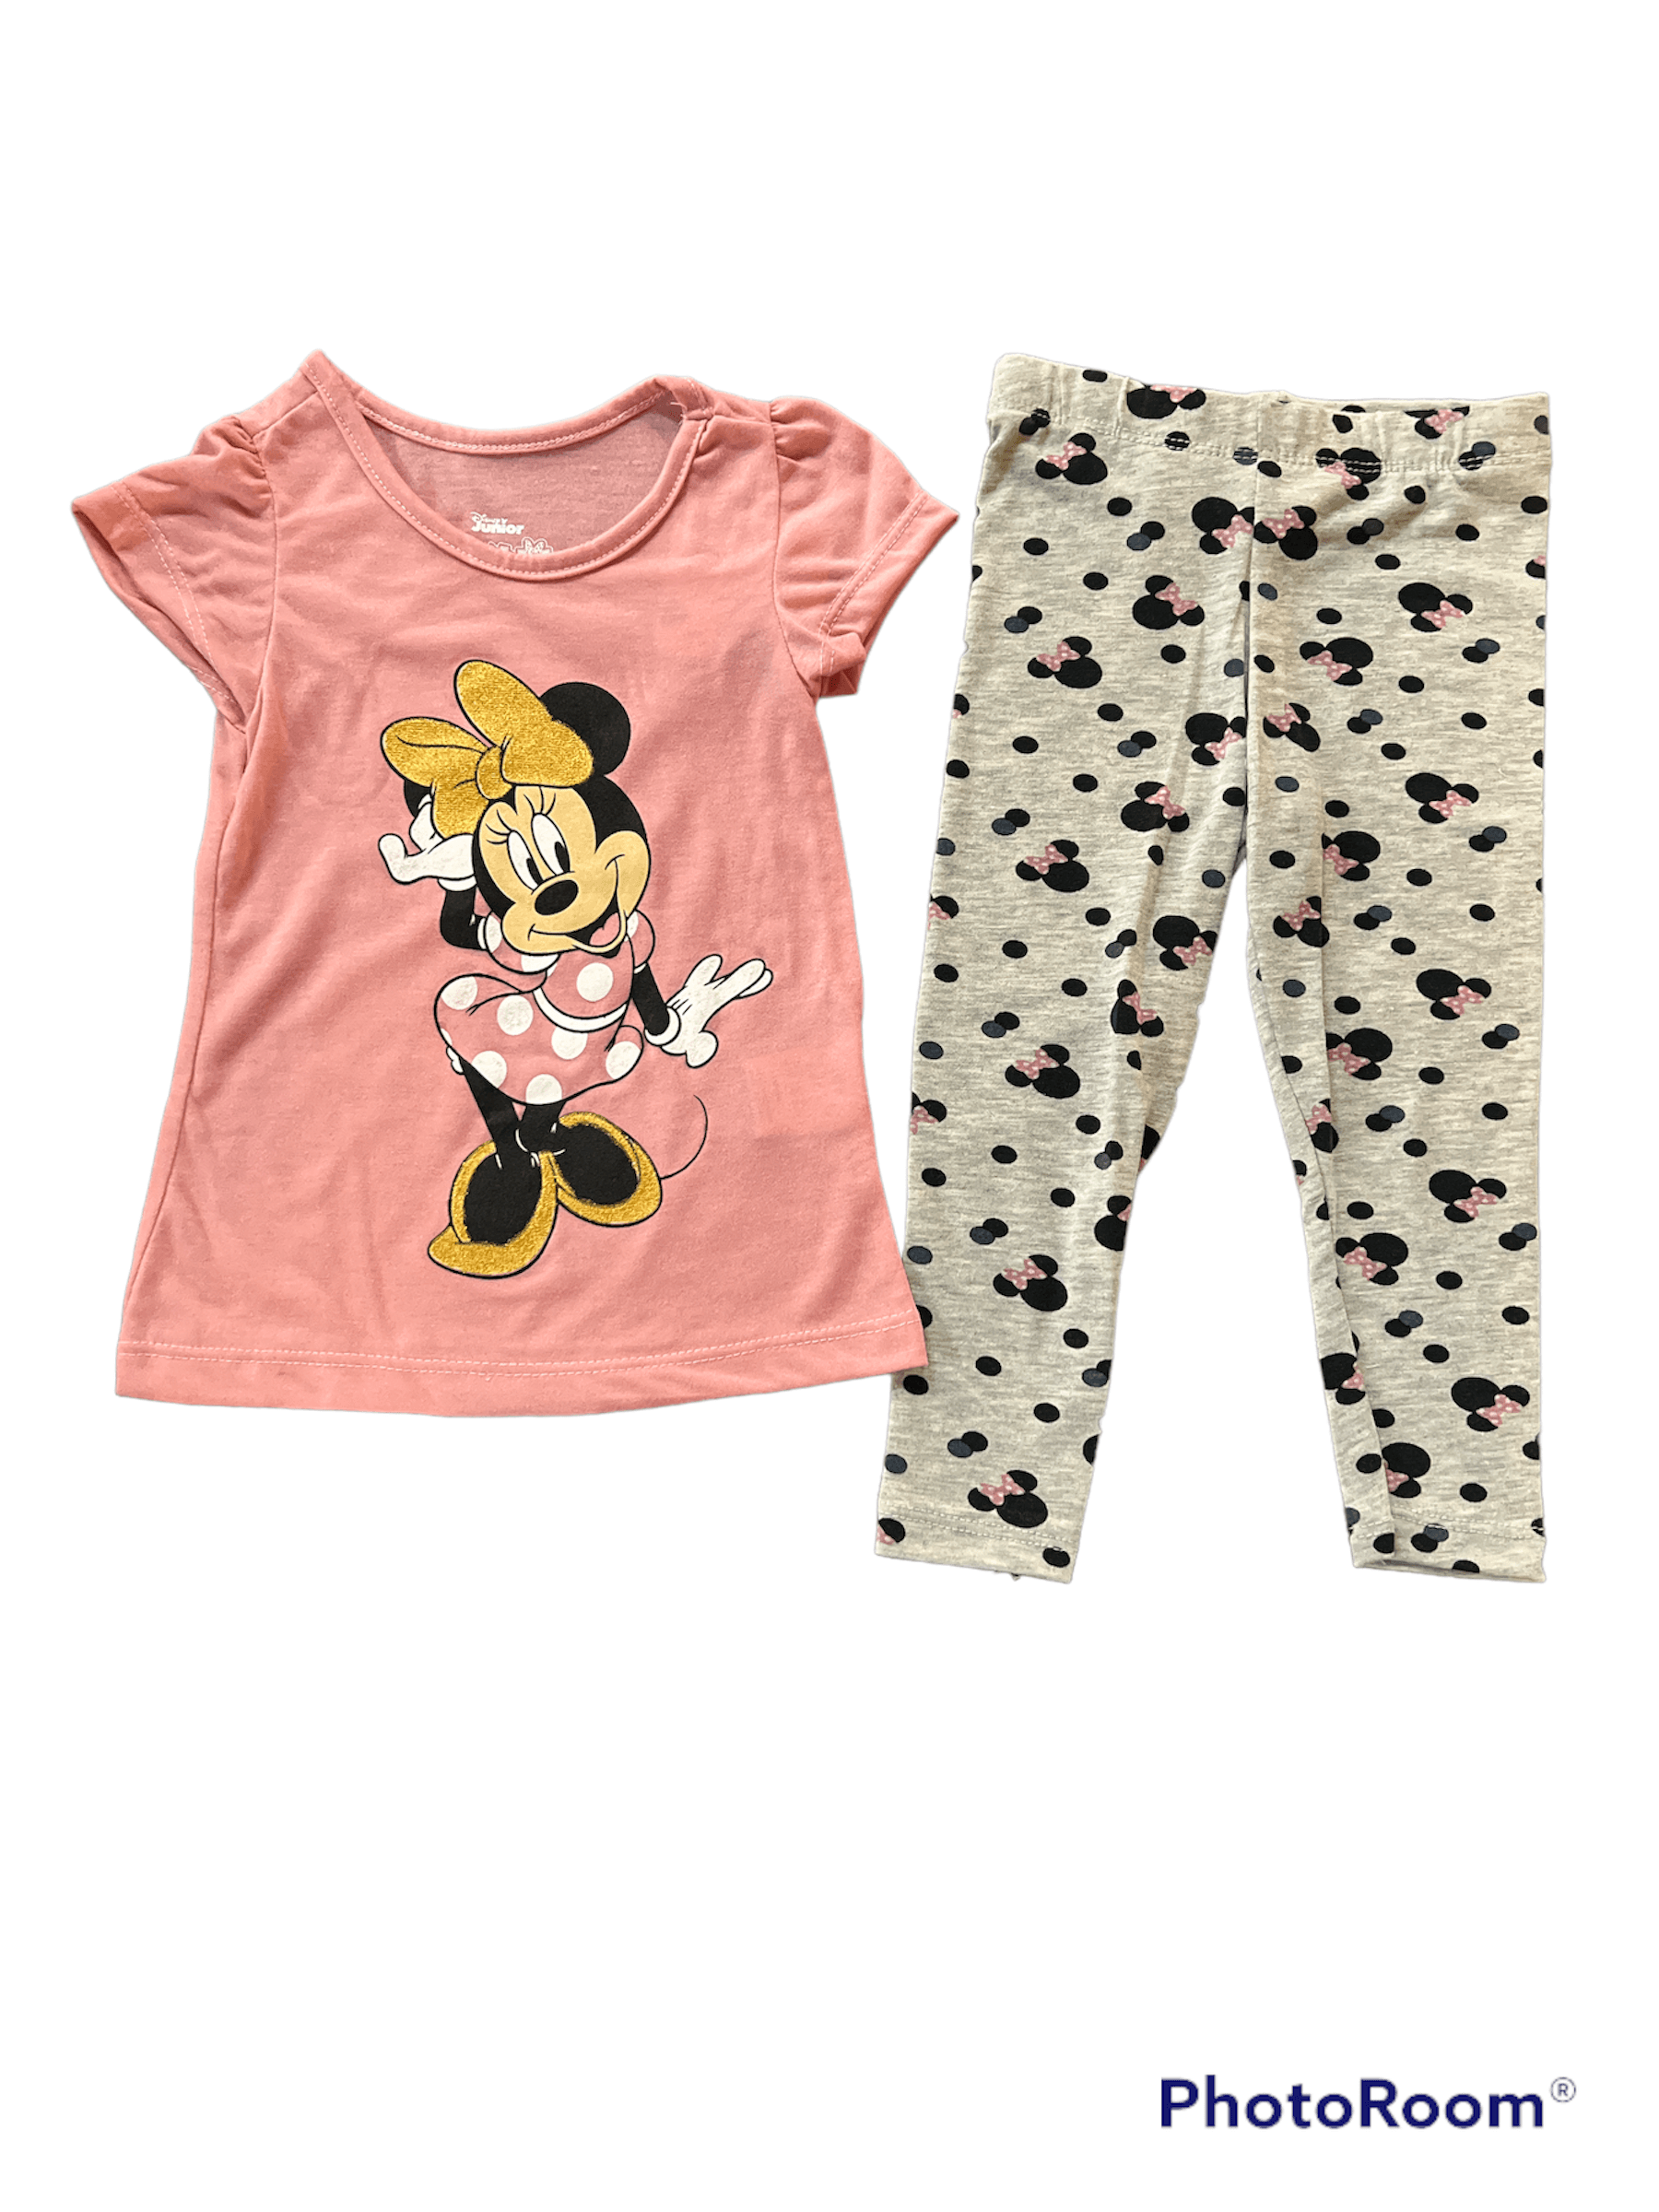 Baby Minnie Mouse Pink Shirt and Grey Polka Dot Pants Set